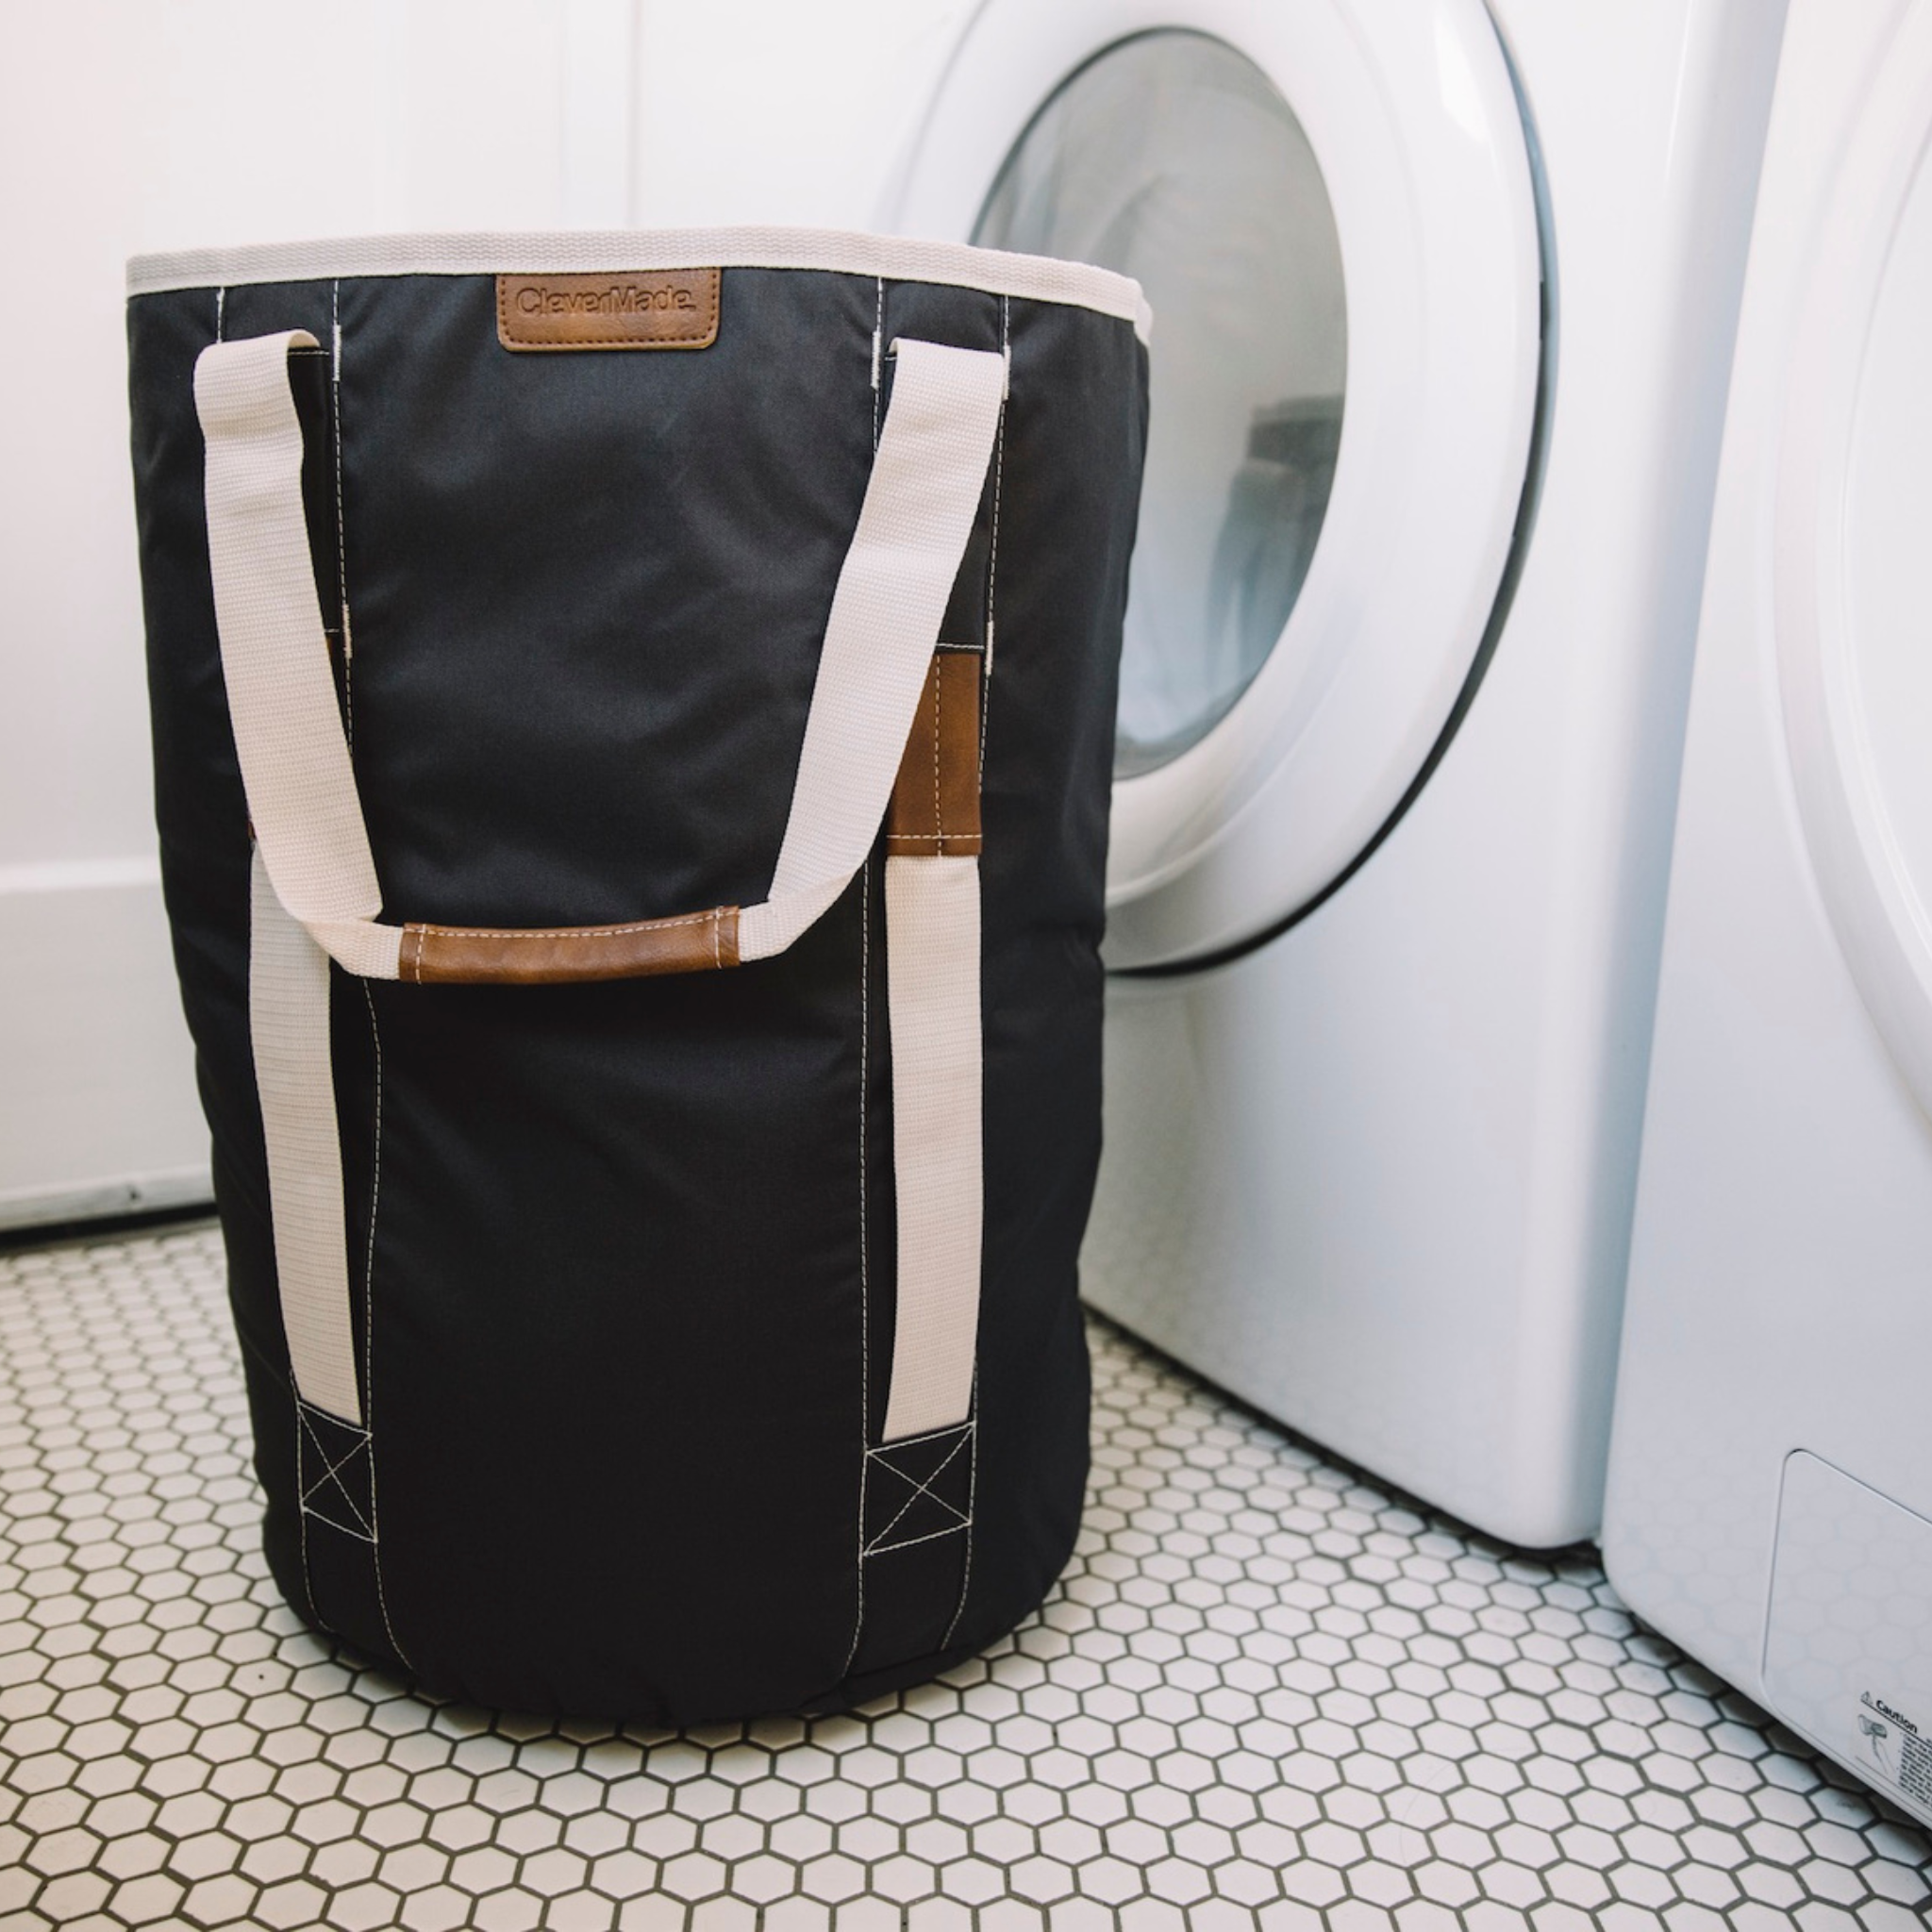 The Good Laundry Bag – Halia. Lifestyle